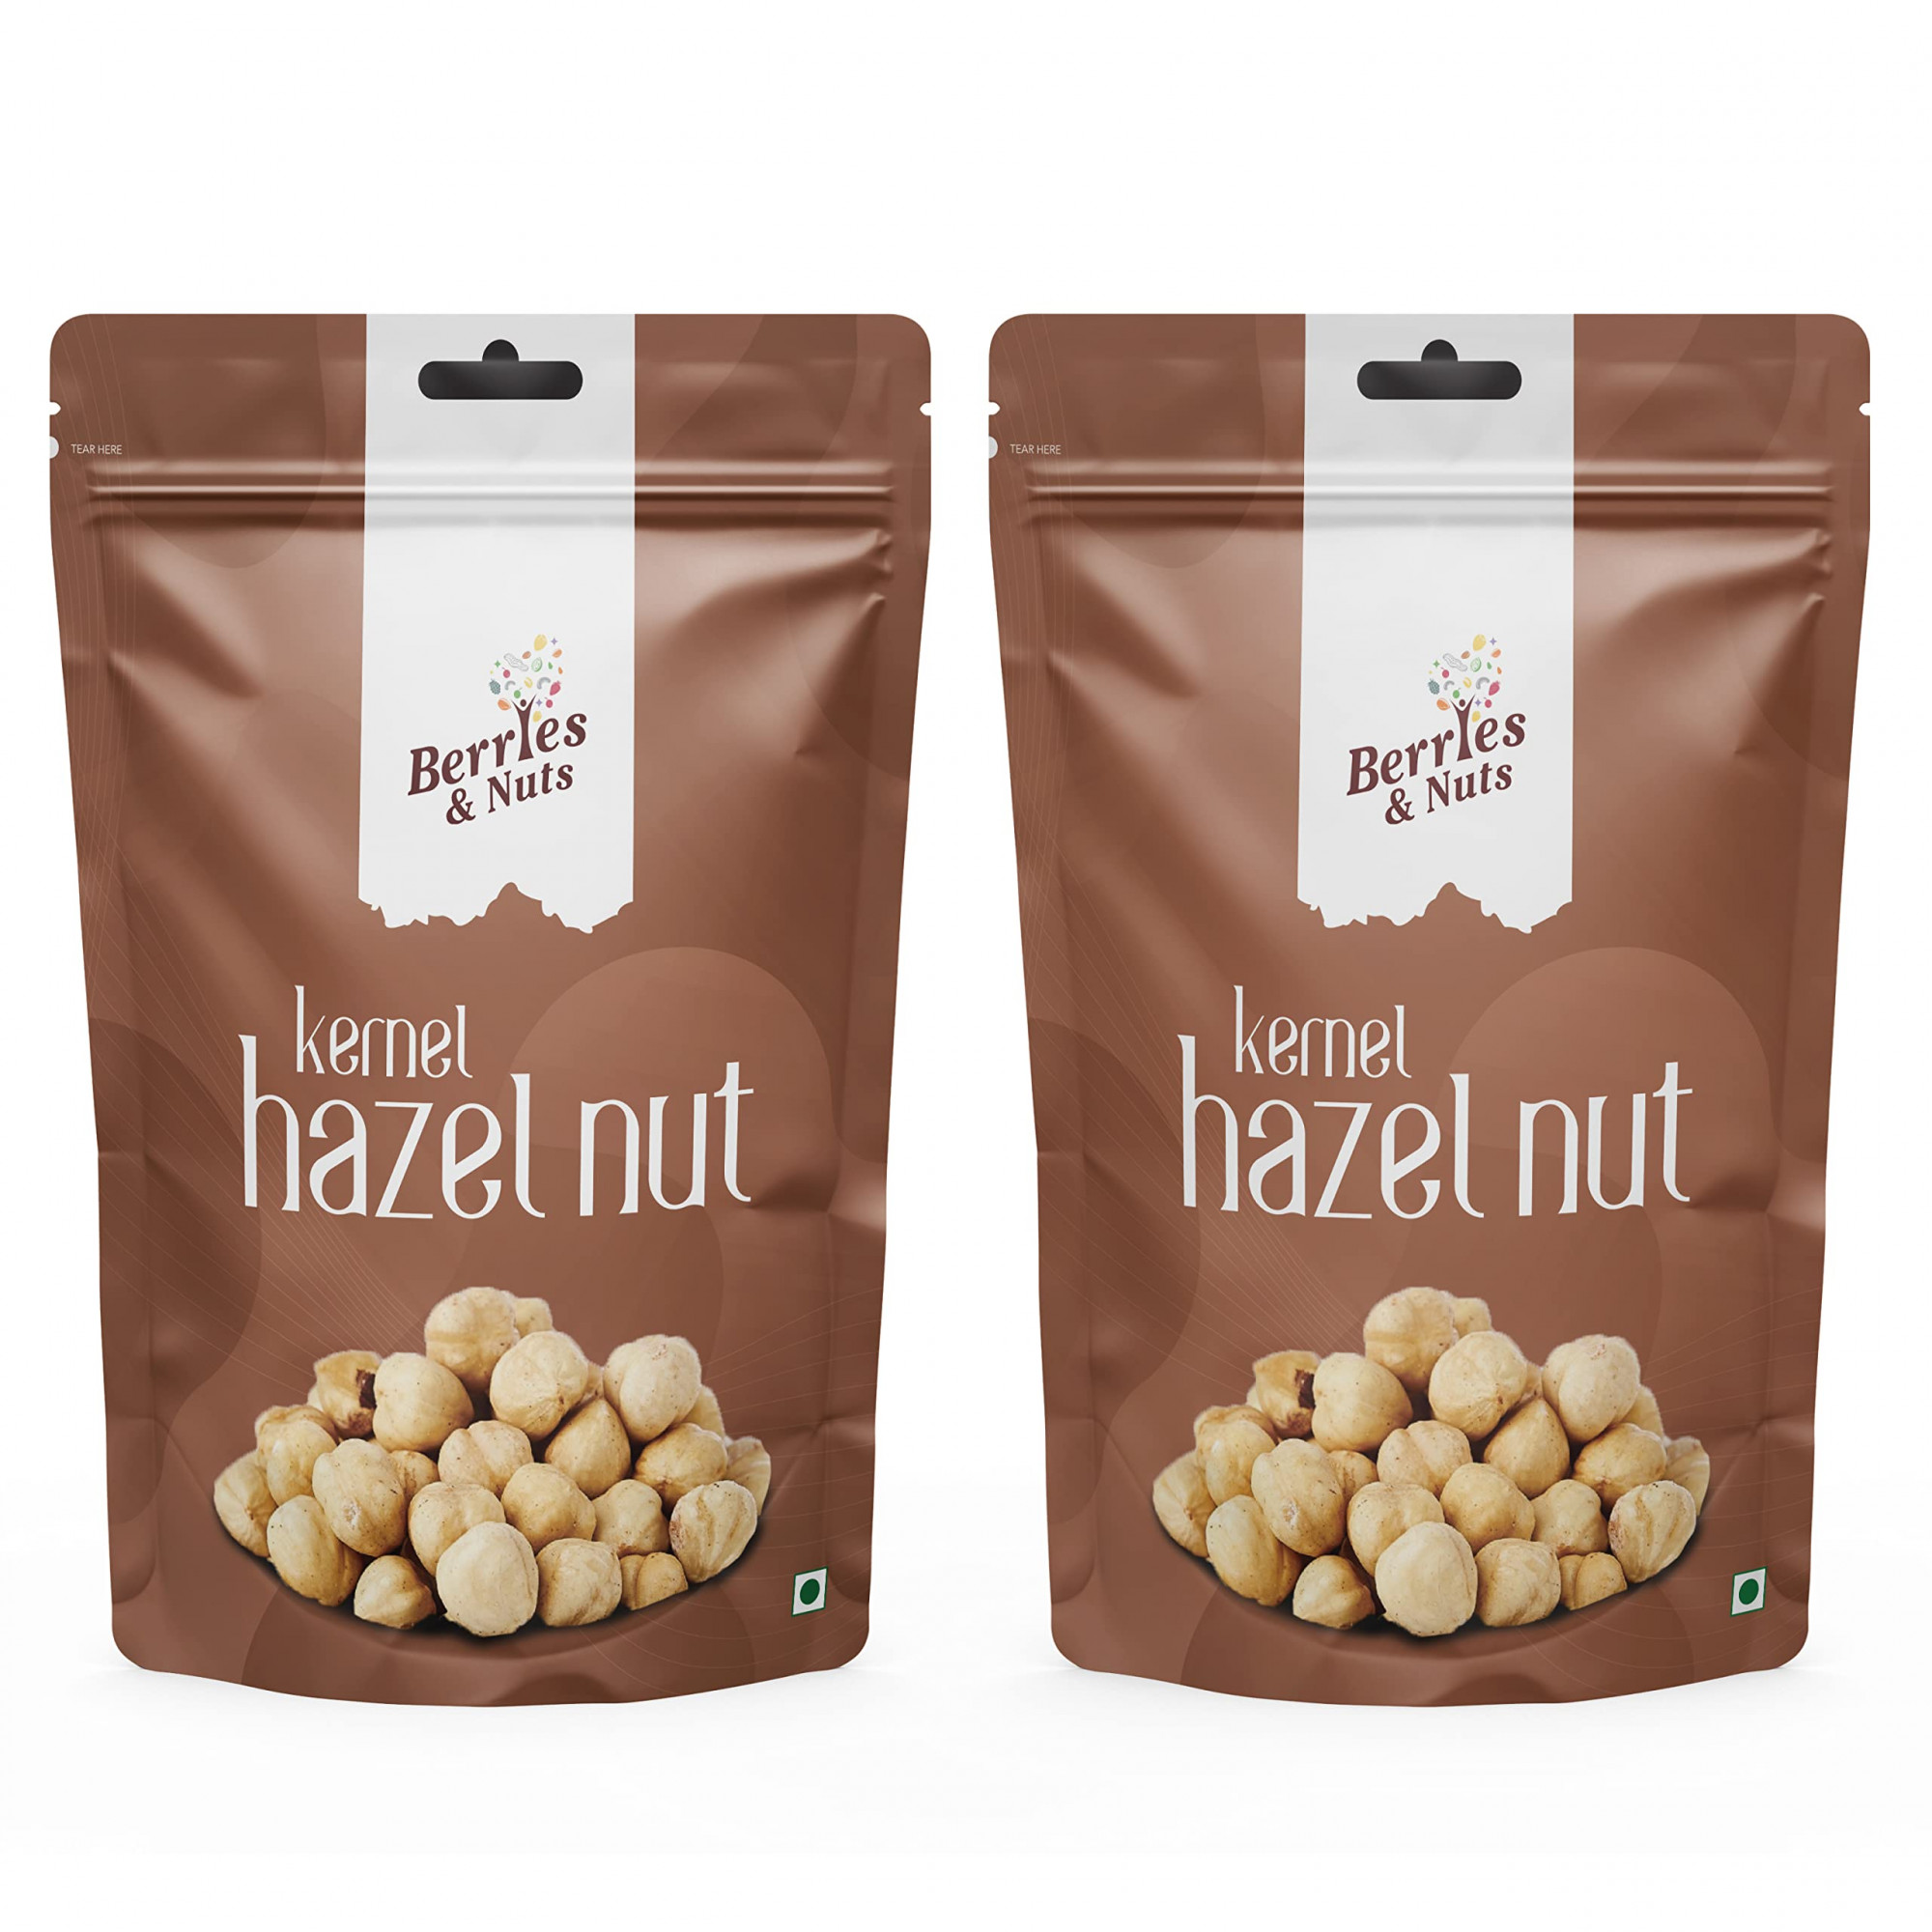 Berries And Nuts Jumbo Hazel Nuts 400 Grams Pouch | Hazel Nut Kernels | 2 Pack of 200 Grams